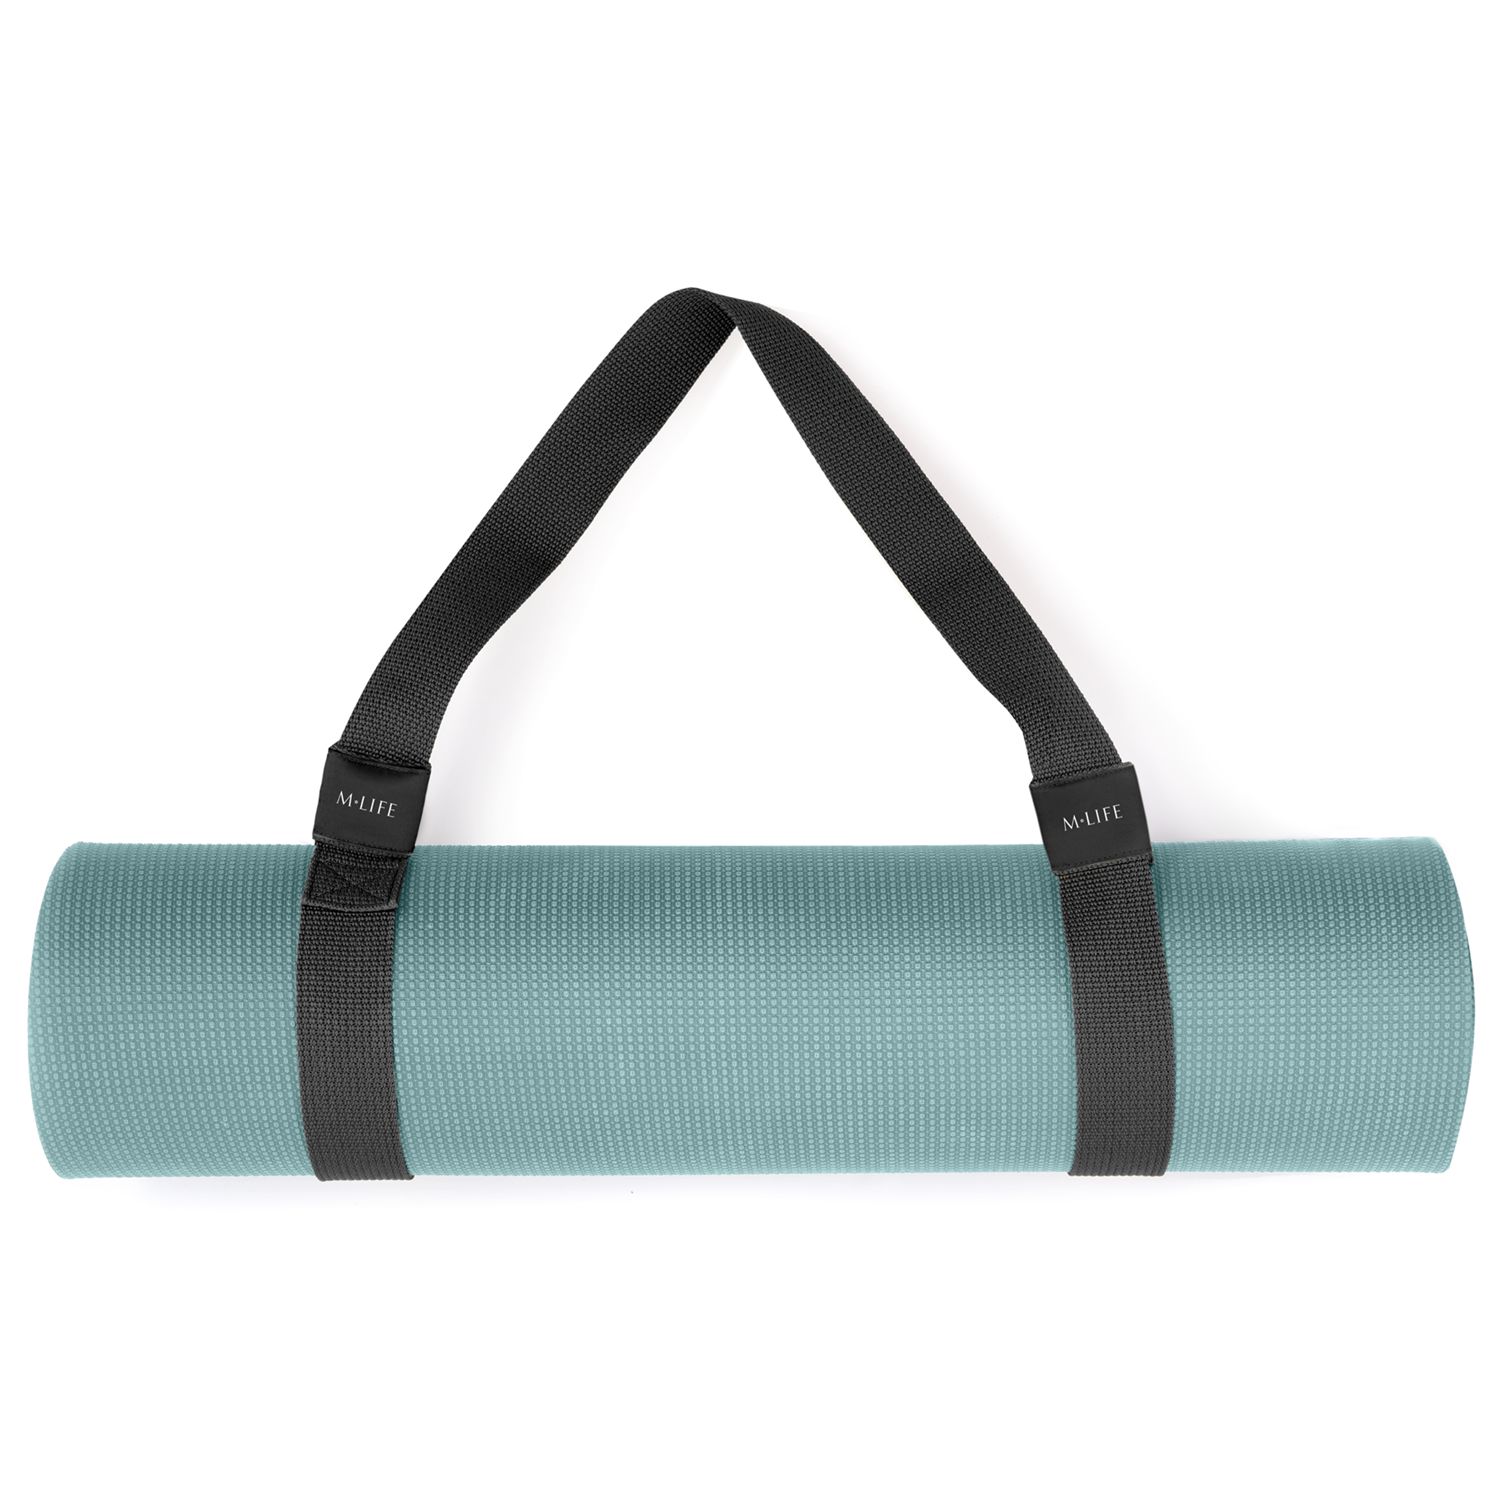 M Life Yoga Mat Carrying Strap, Black